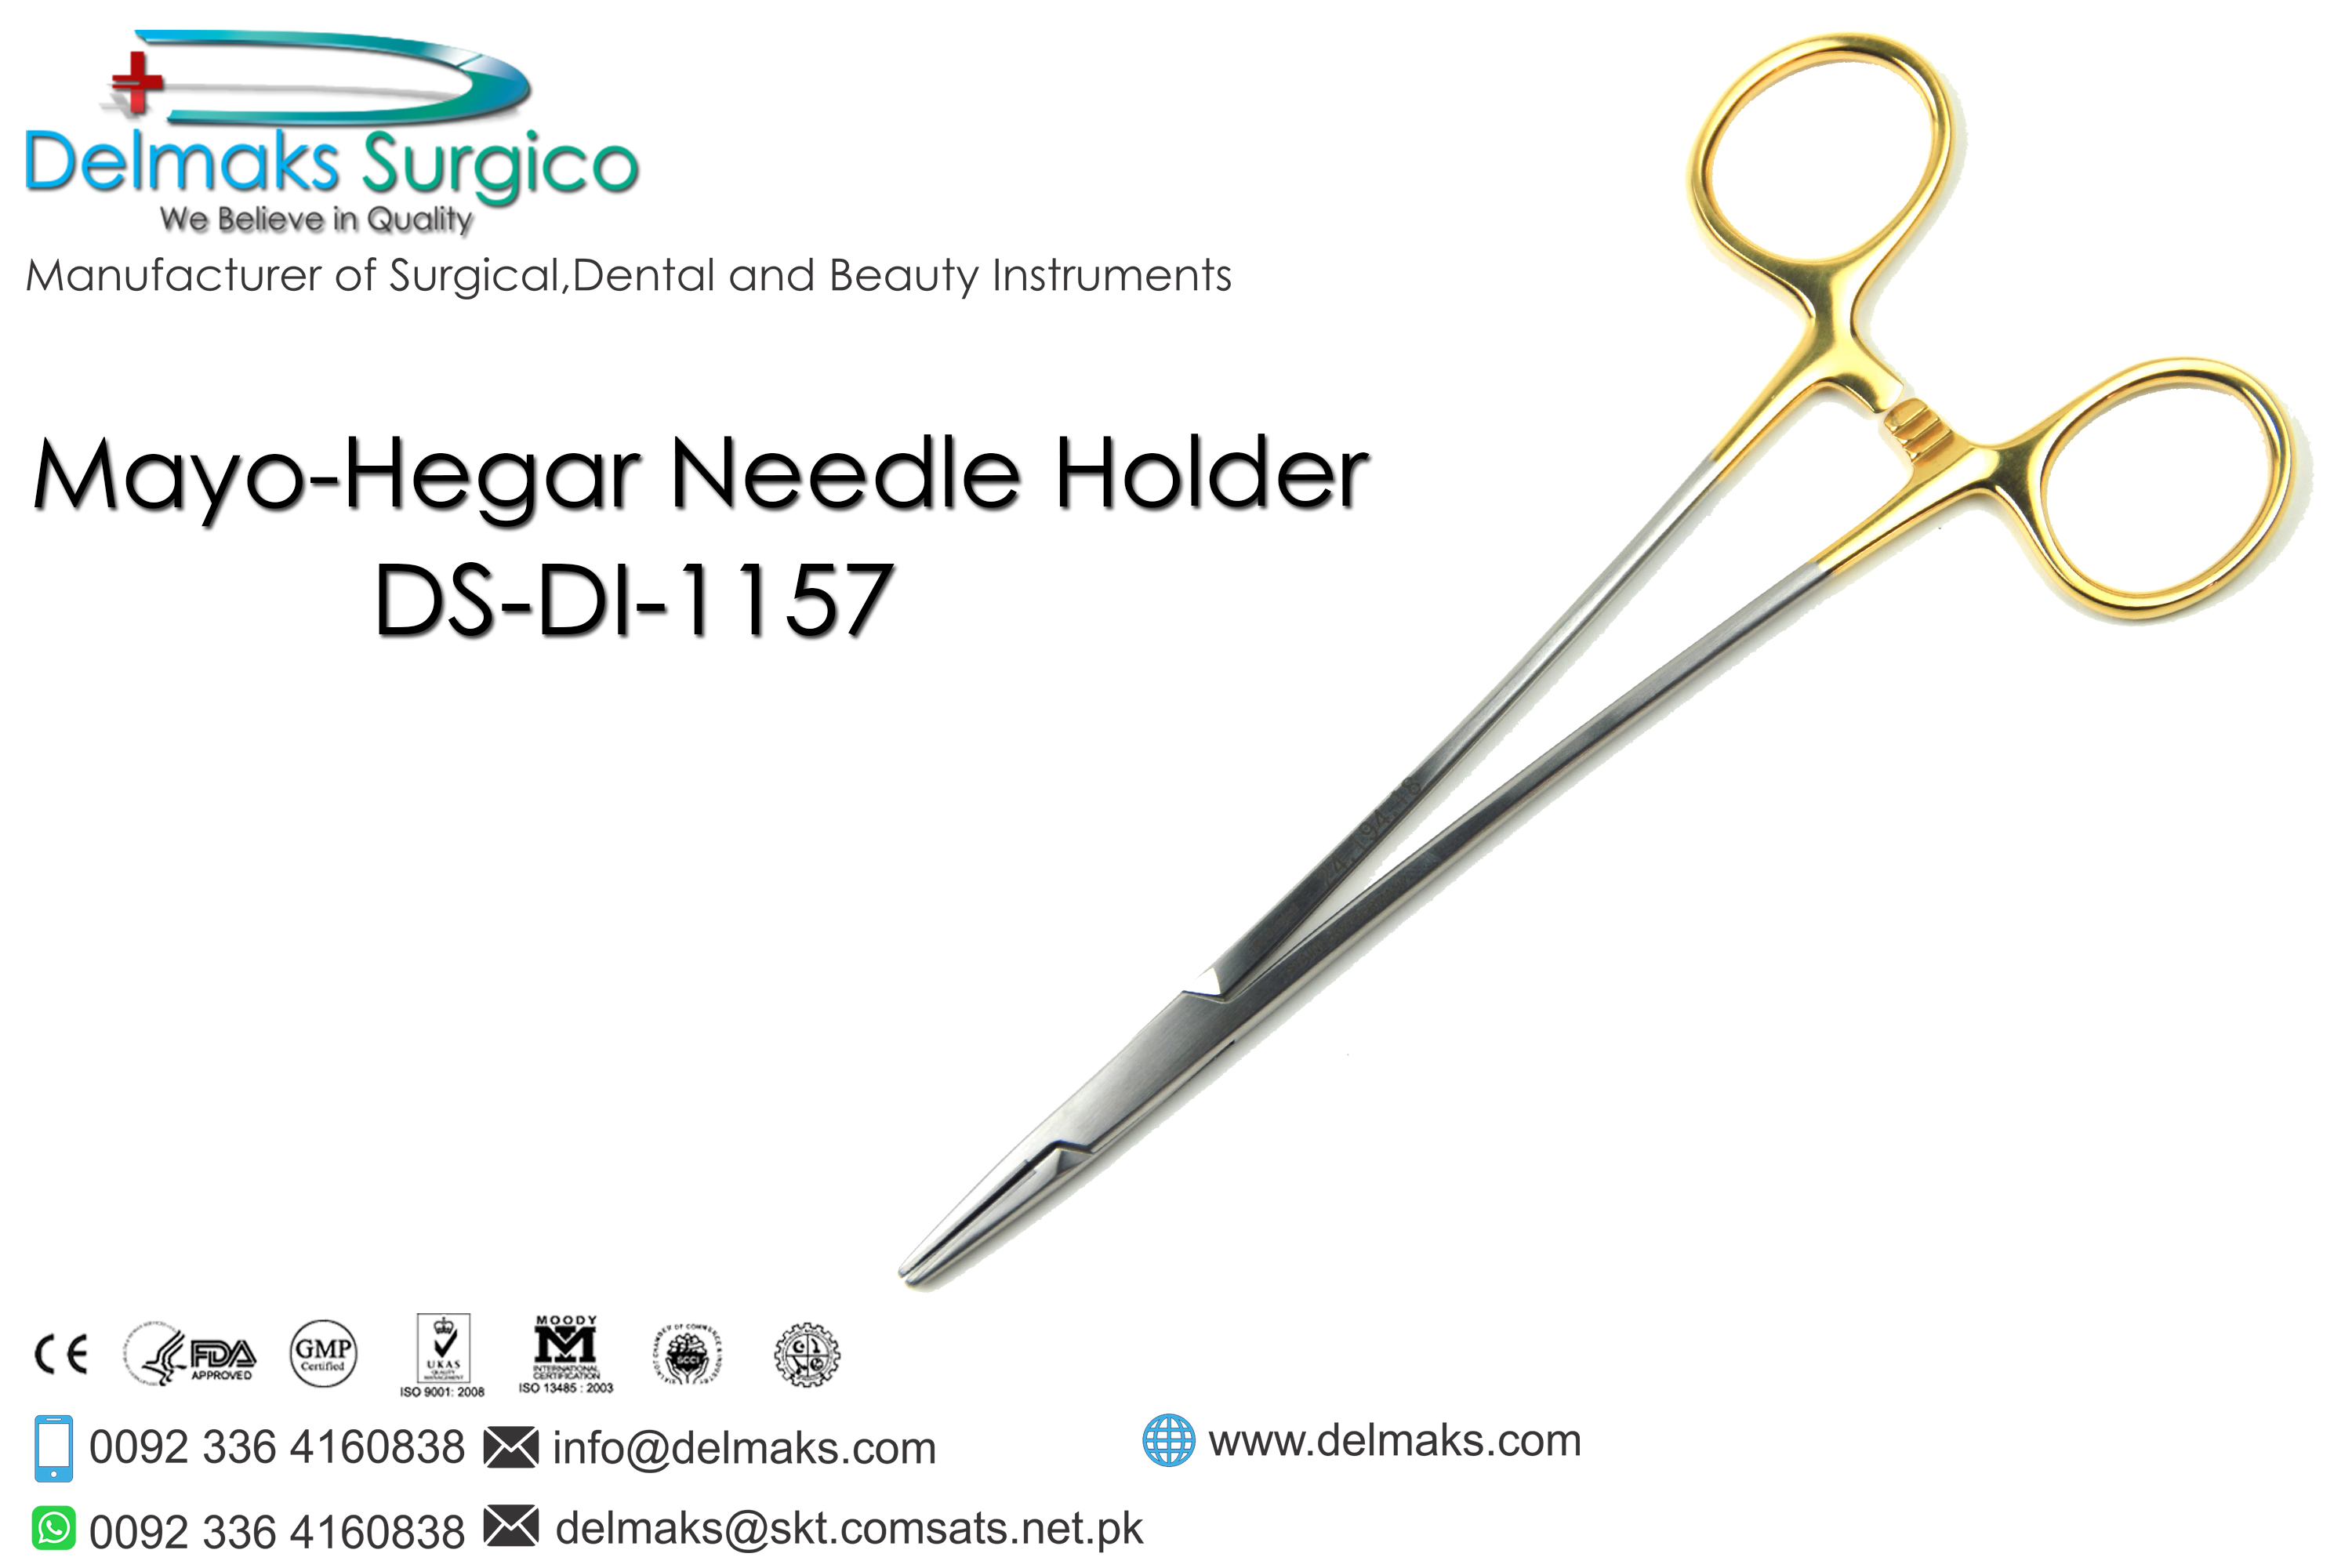 Castroviejo Needle Holder-Needle Holders-Dental Instruments-Delmaks Surgico